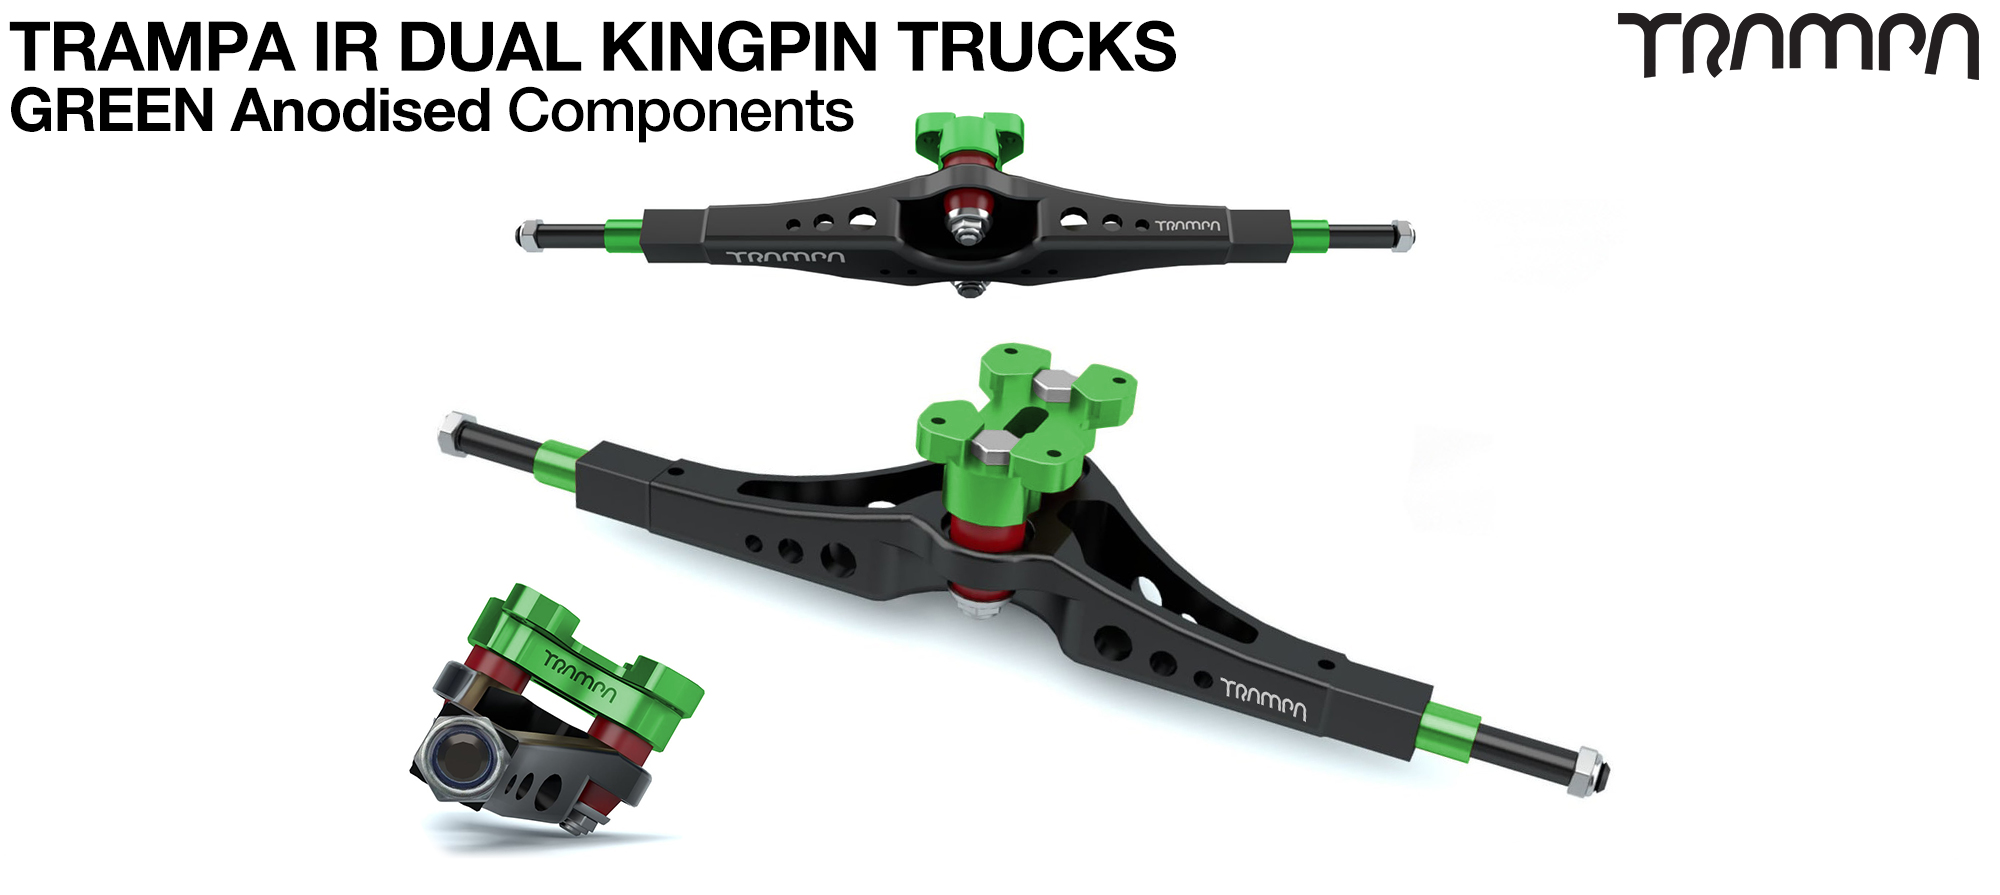 TRAMPA IR Double Kingpinned Skate Style Trucks fit every 19.1mm Motor Mount TRAMPA offers - GREEN